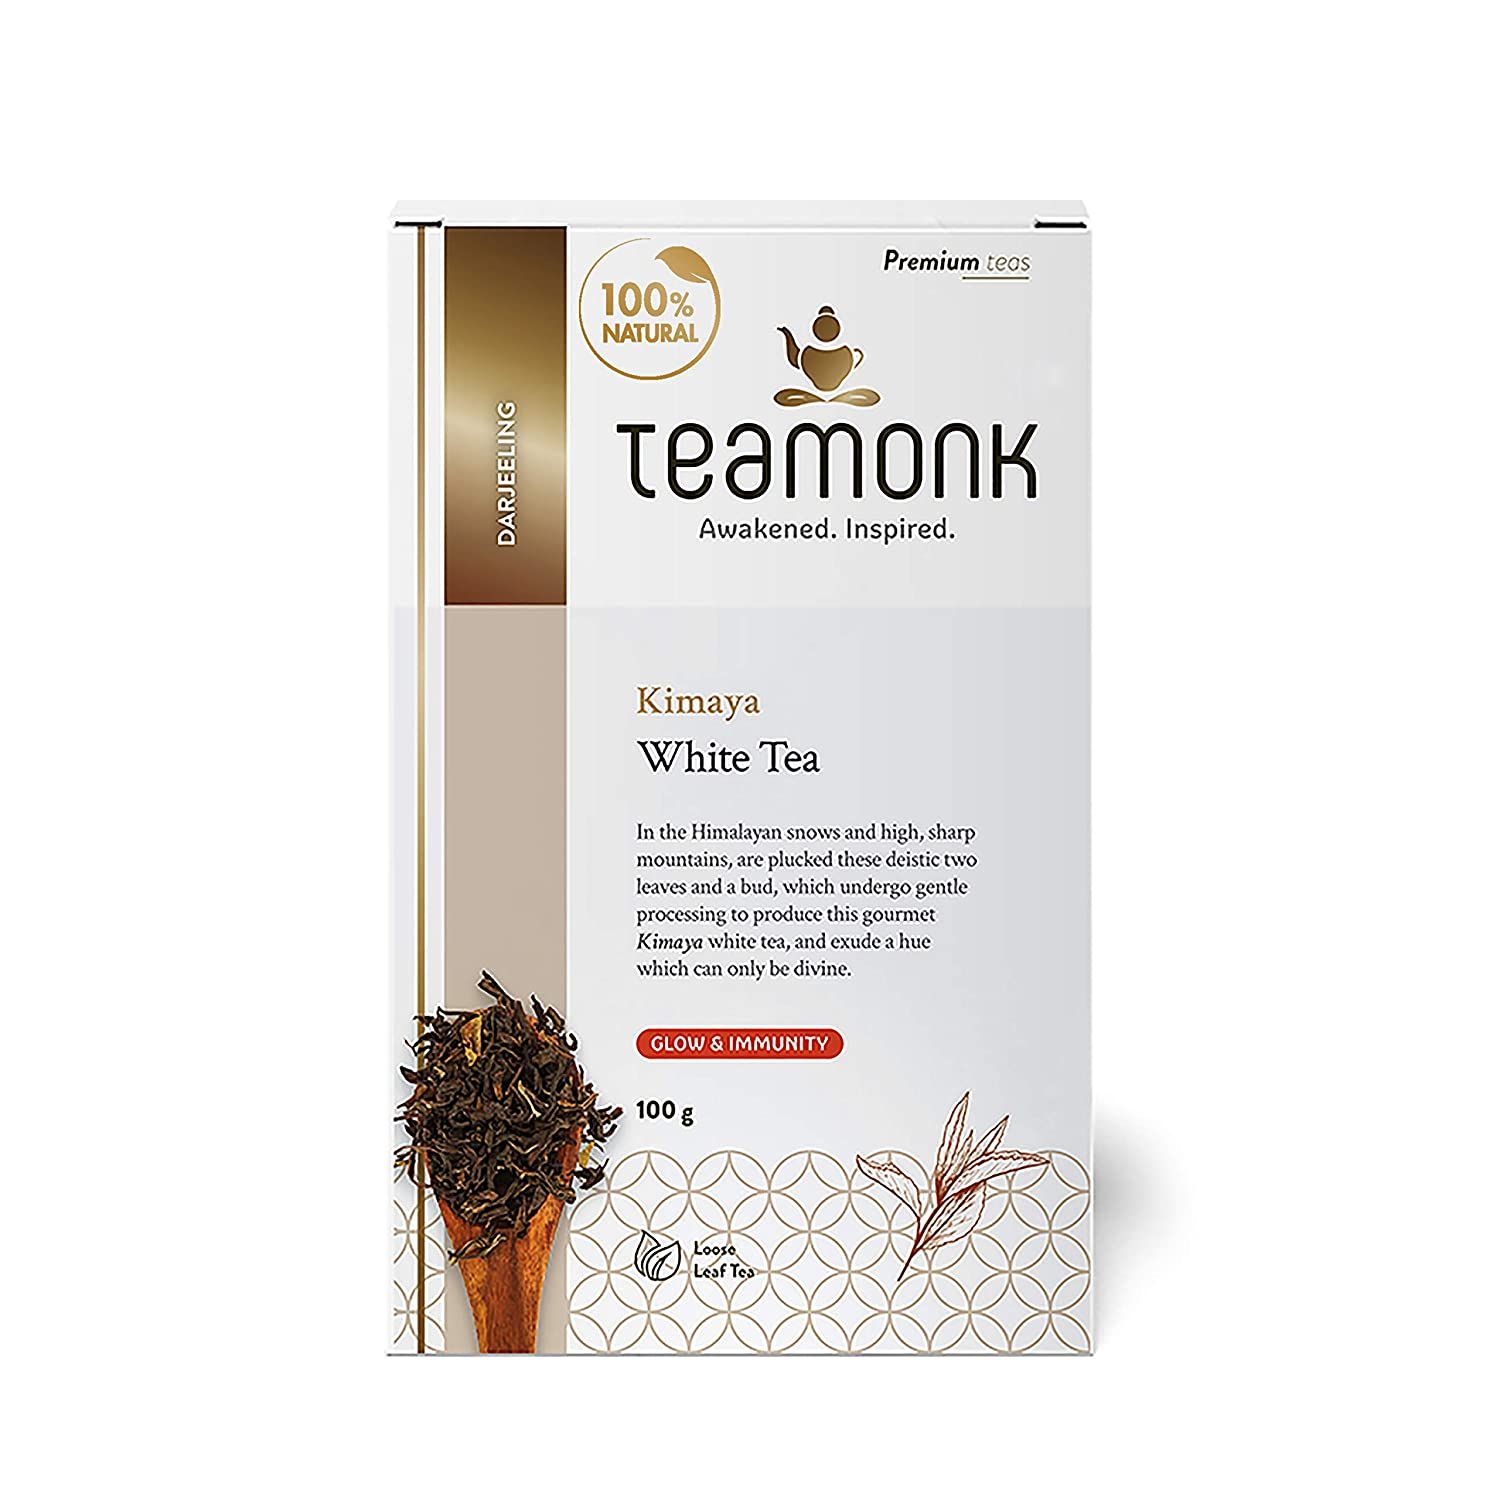 Teamonk Kimaya White Tea Image